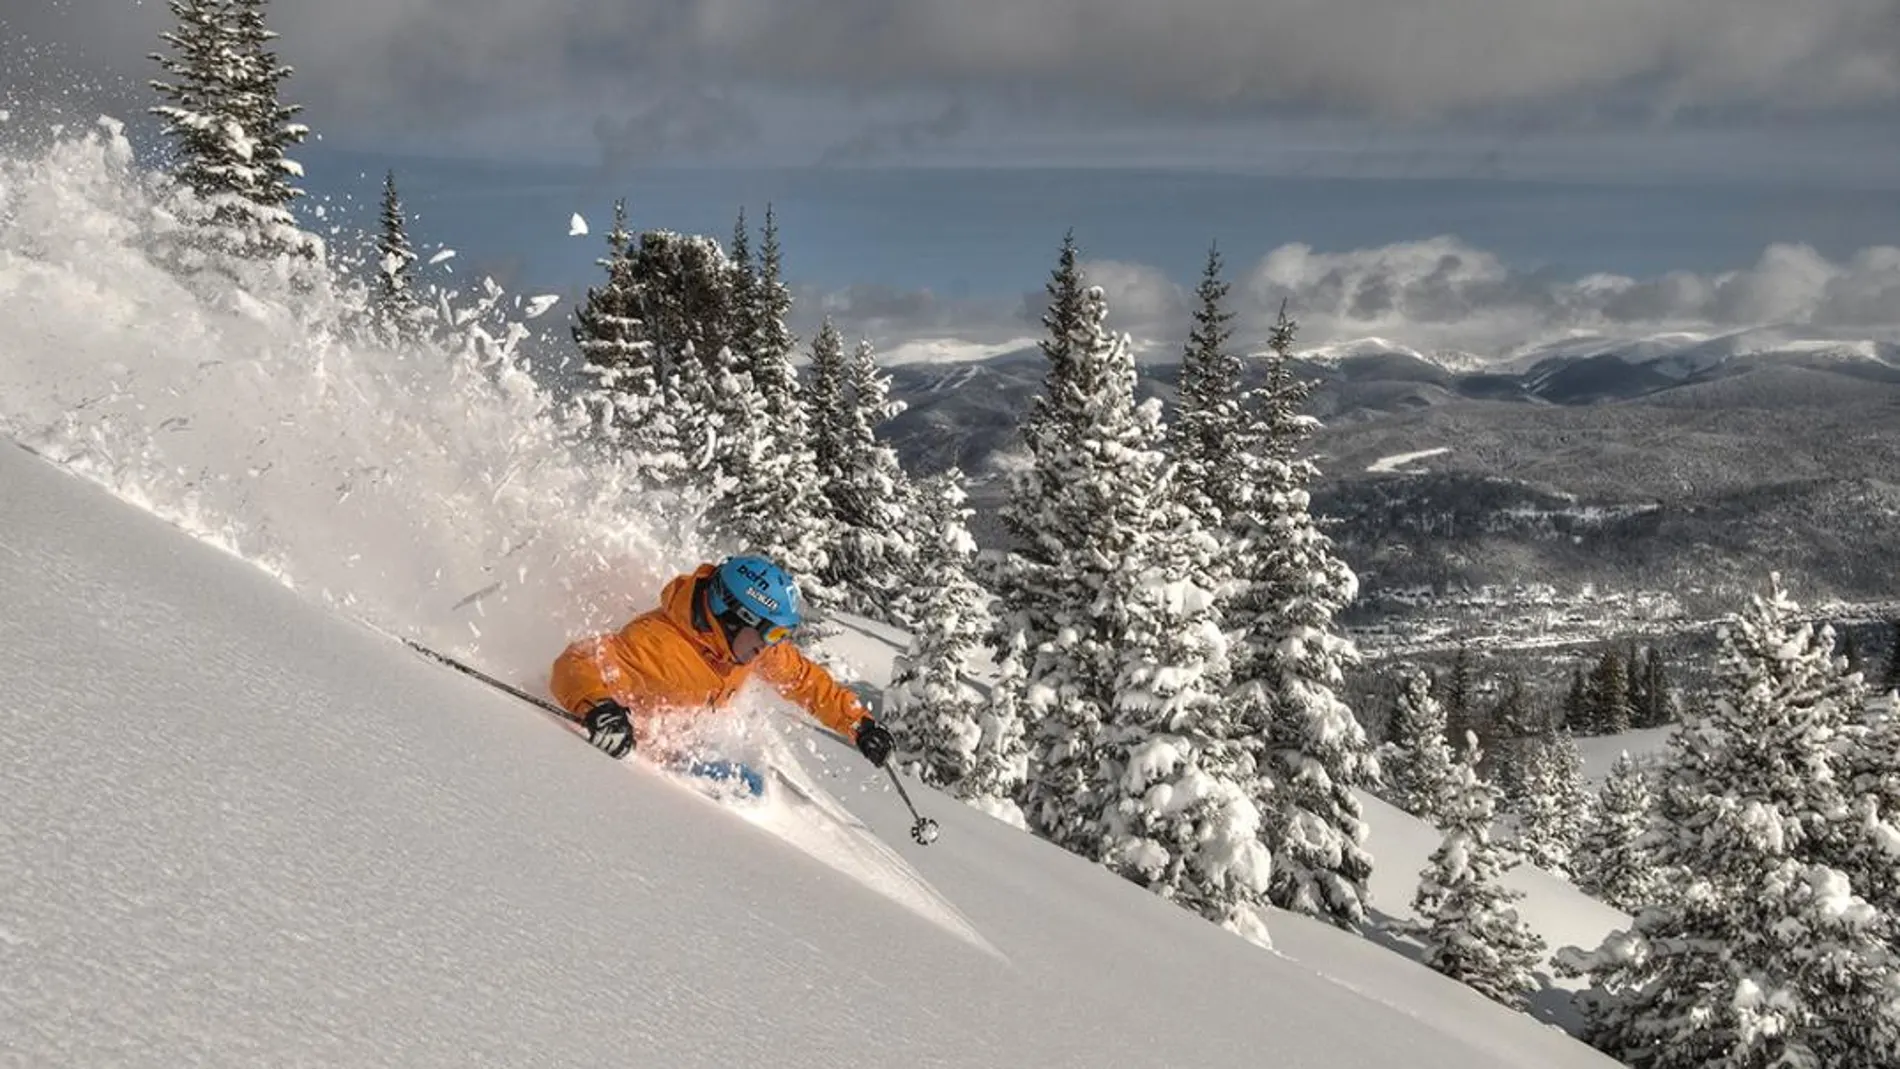 Destinos paradisíacos para esquiar en fin de año en familia